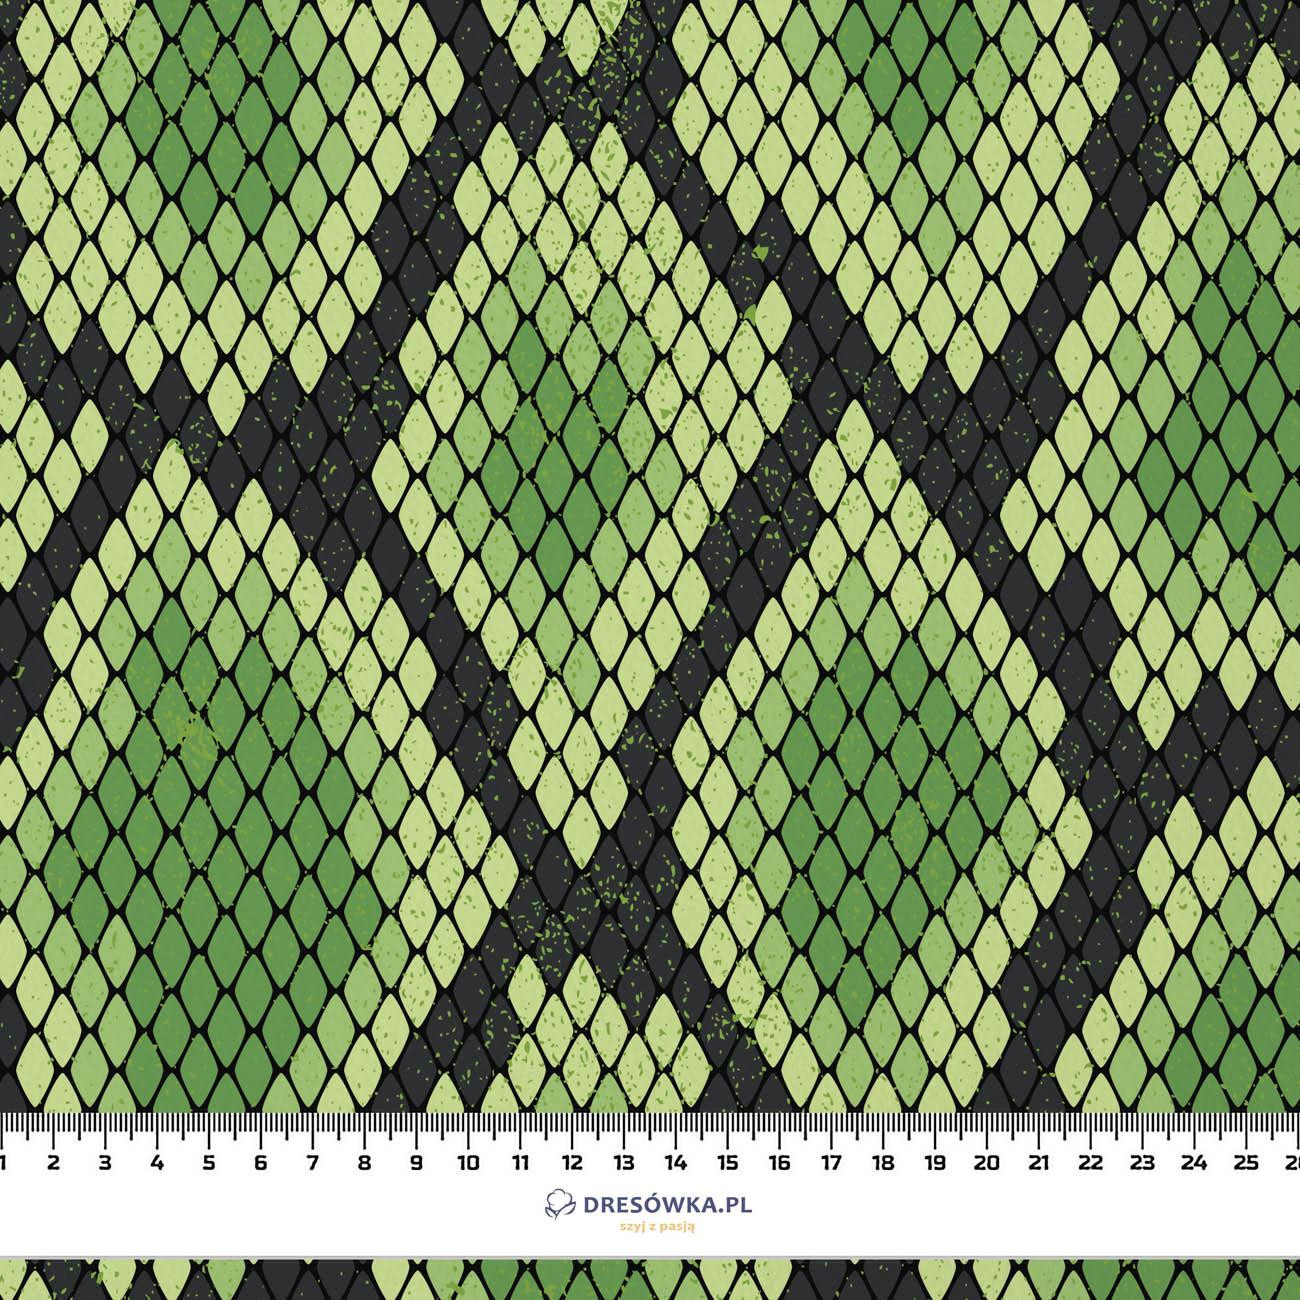 SNAKE'S SKIN PAT. 2 / green - Waterproof woven fabric